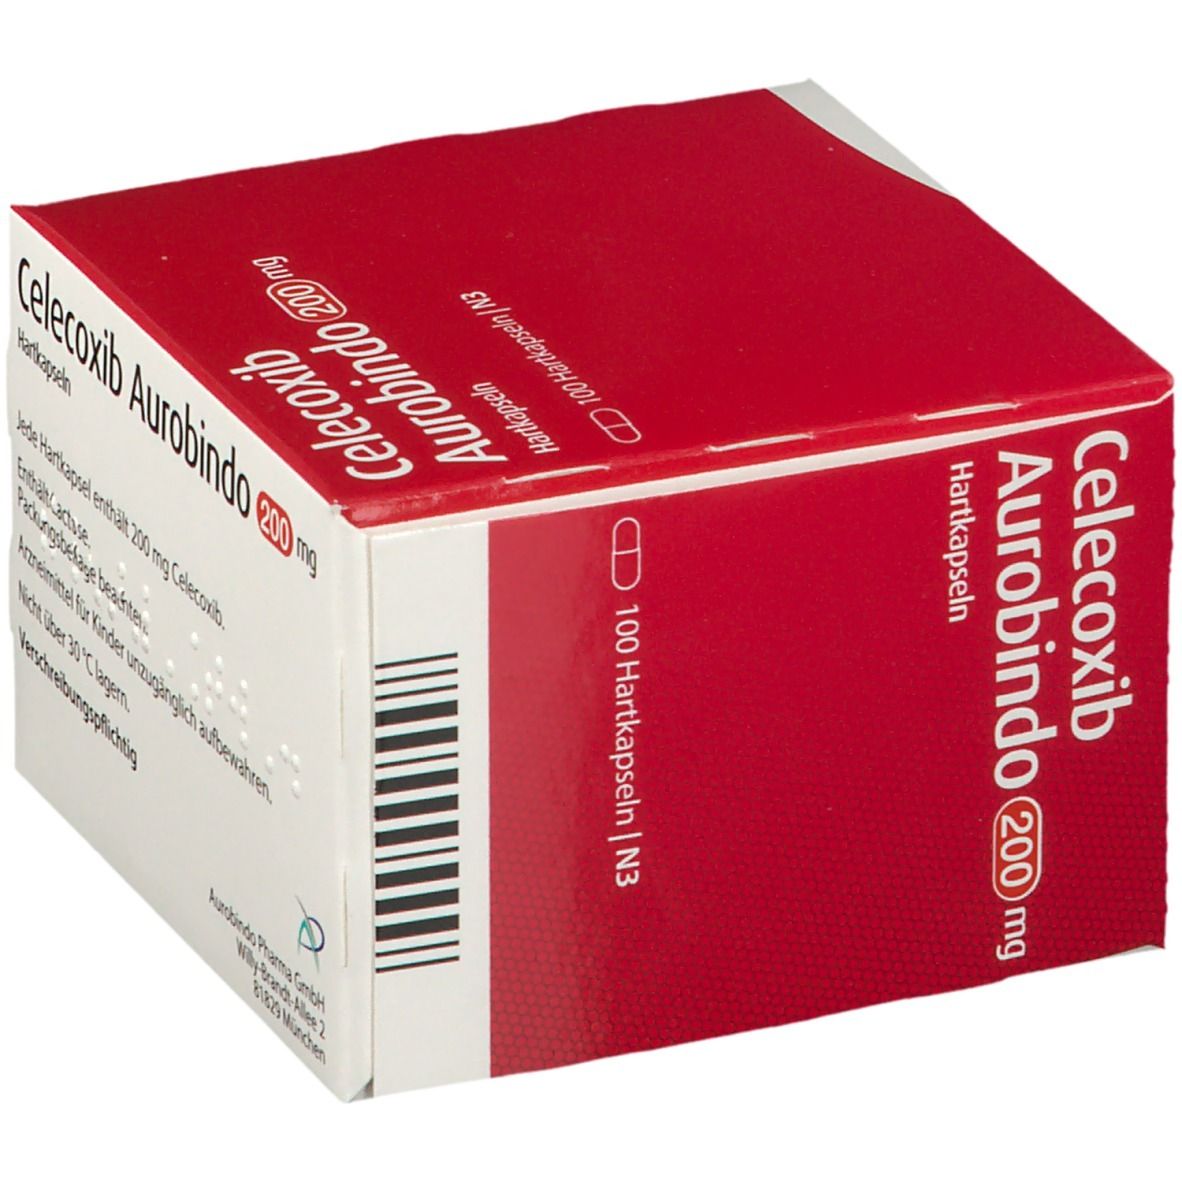 Celecoxib Aurobindo 200 mg